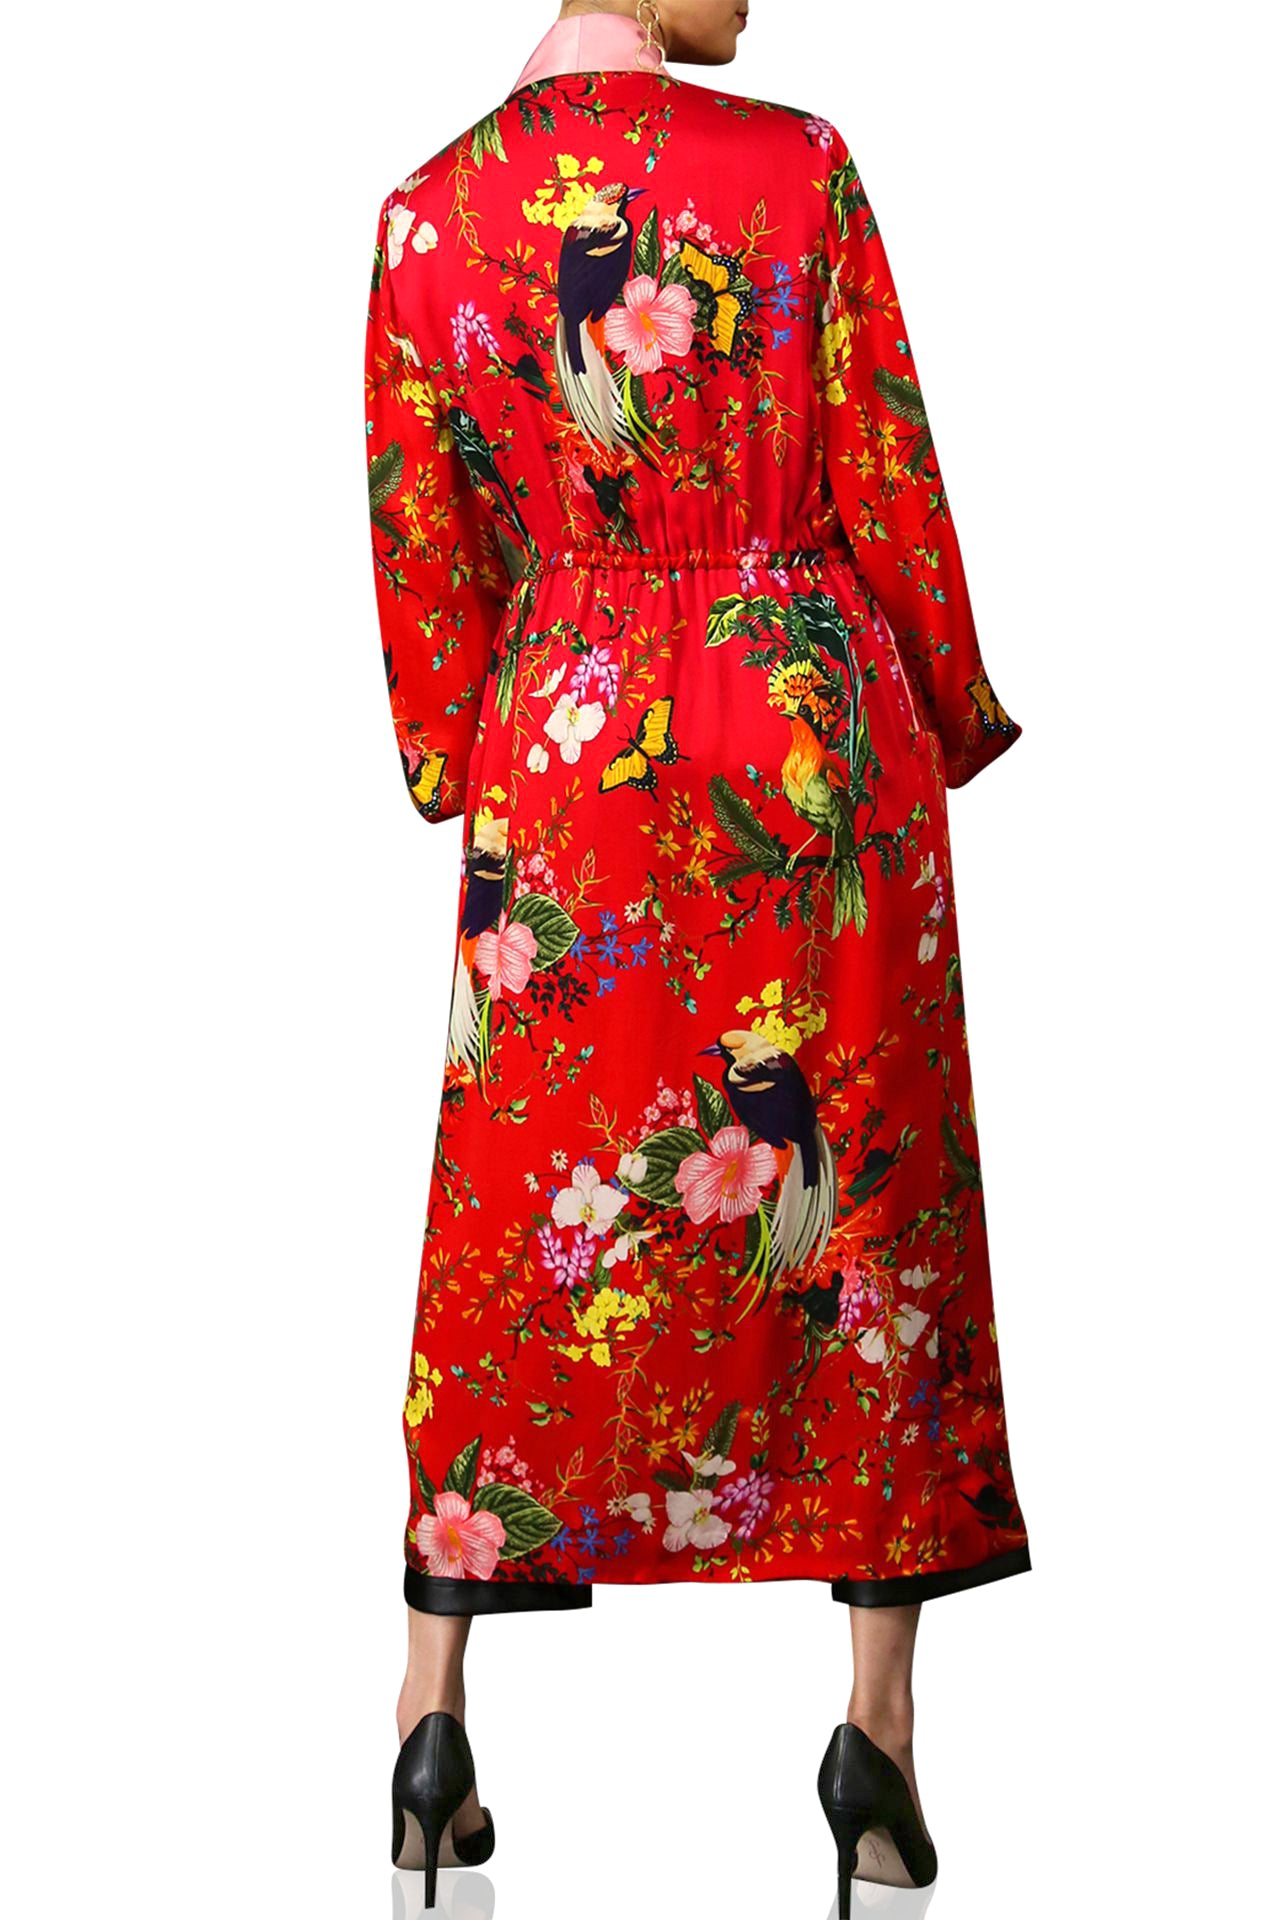 Floral-Print-Designer-Robe-Dress-From-Kyle-Richards